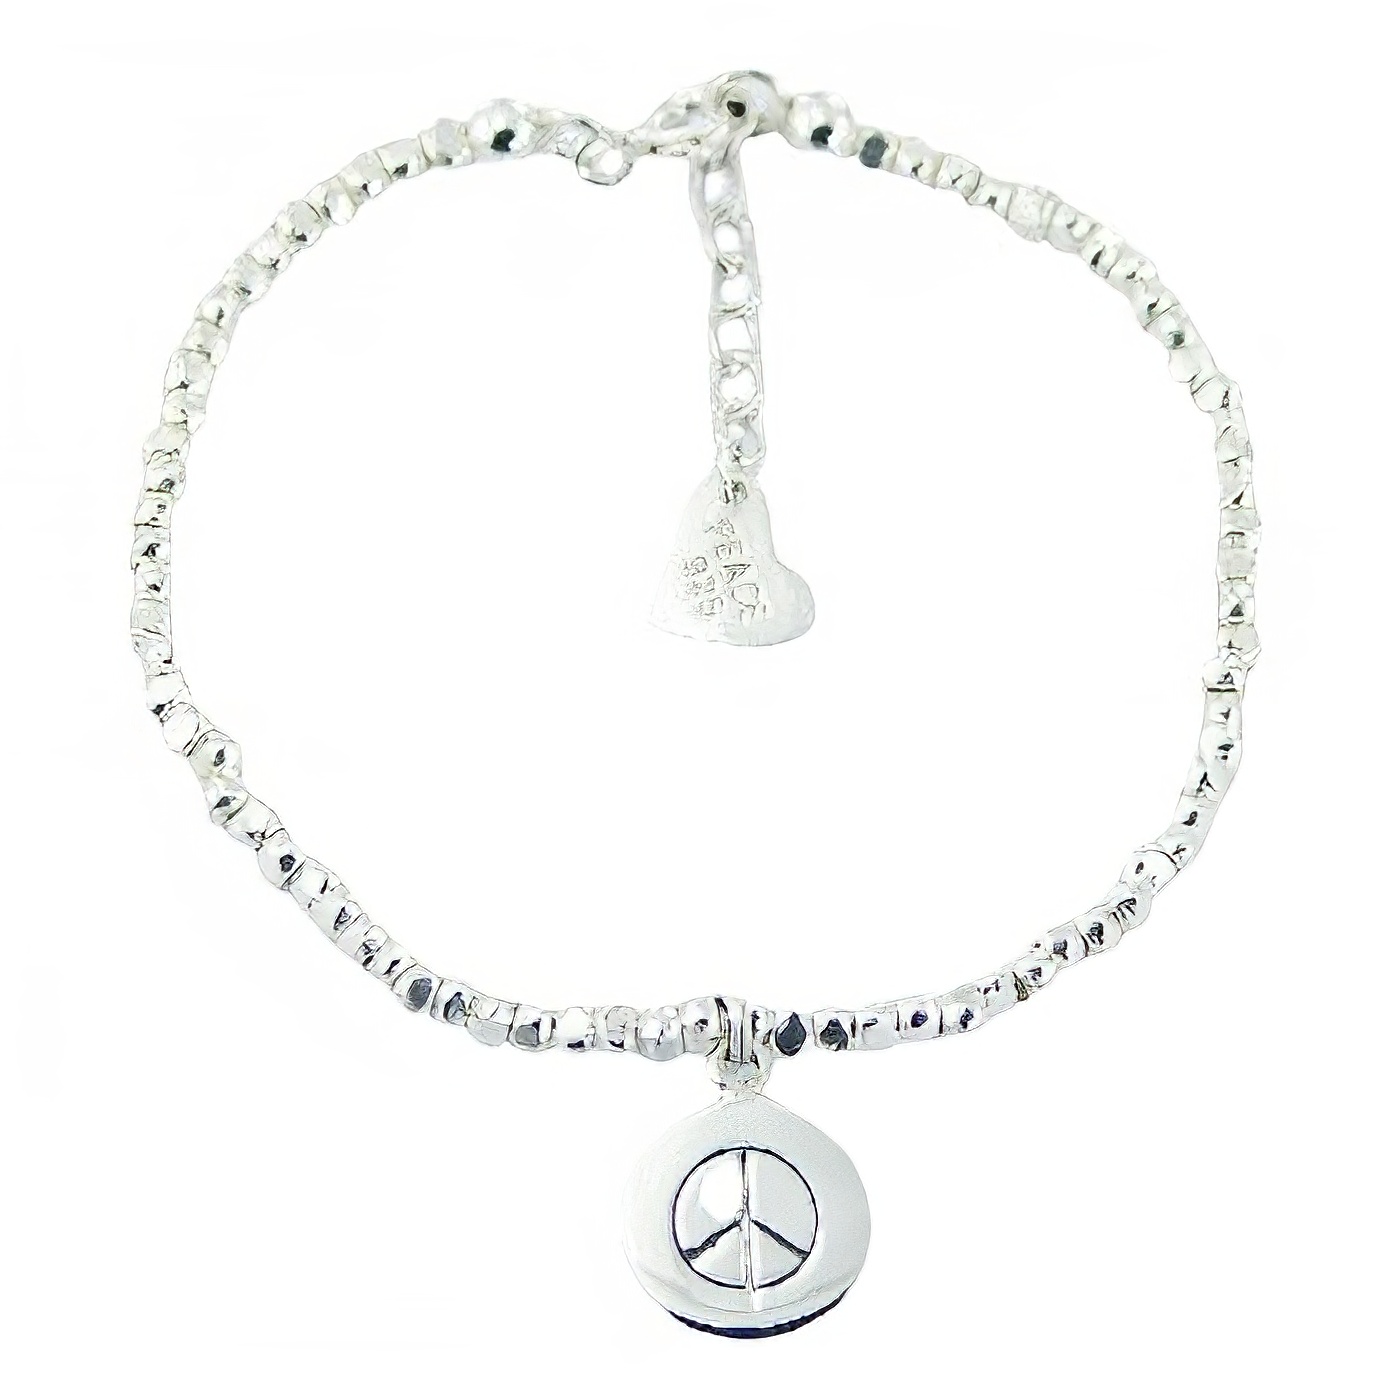 Cuboid silver beads bracelet peace disc charm 